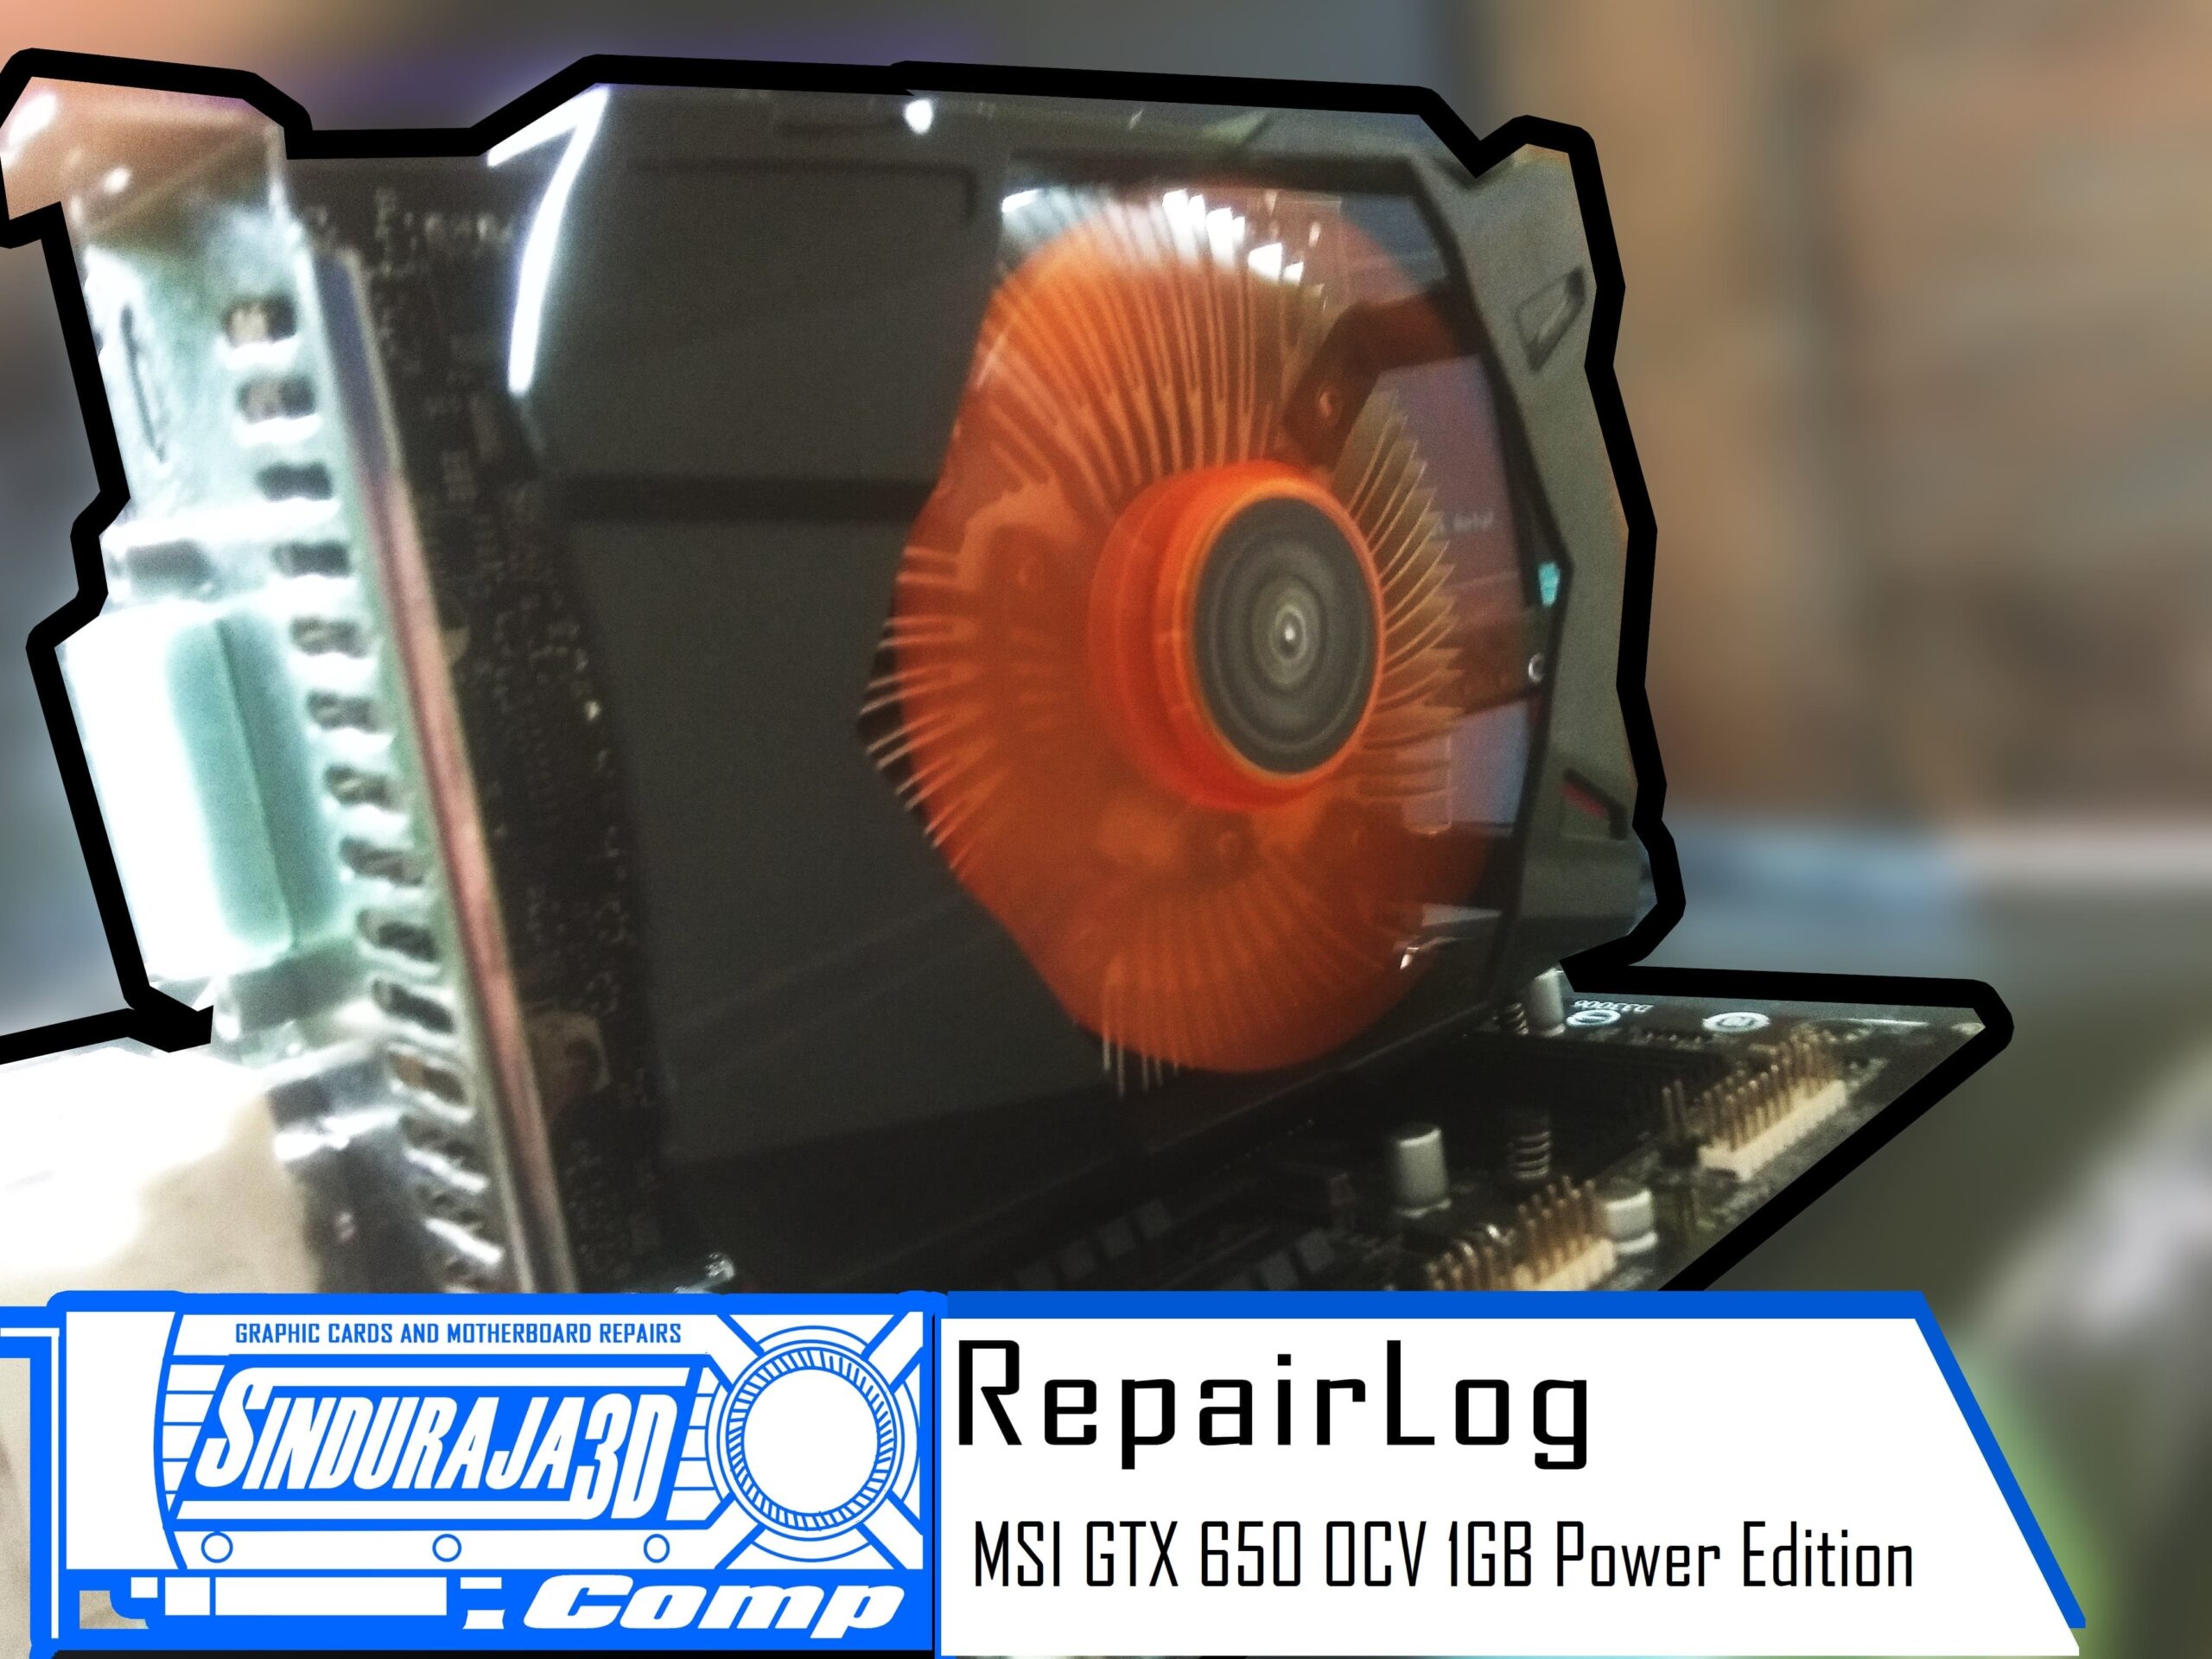 RepairLog MSI GTX 650 OCV 1GB Power Edition1 scaled